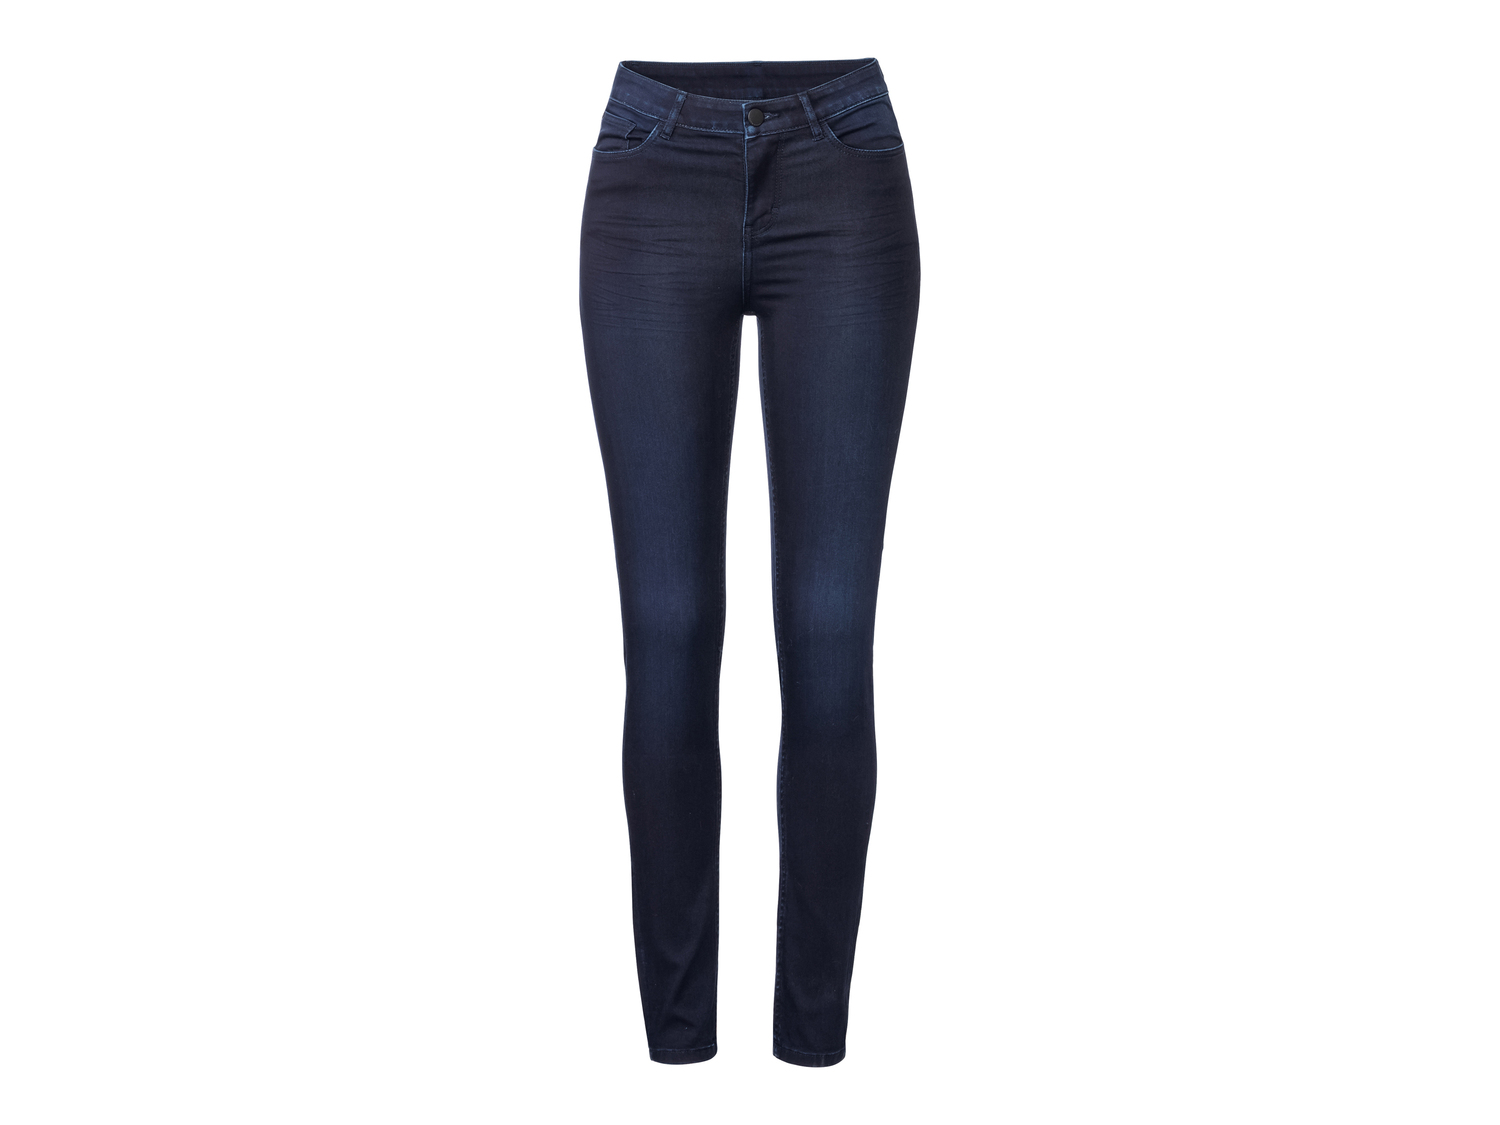 Jeans Super Skinny da donna Esmara, prezzo 12.99 &#8364; 
Misure: 38-46
Taglie ...